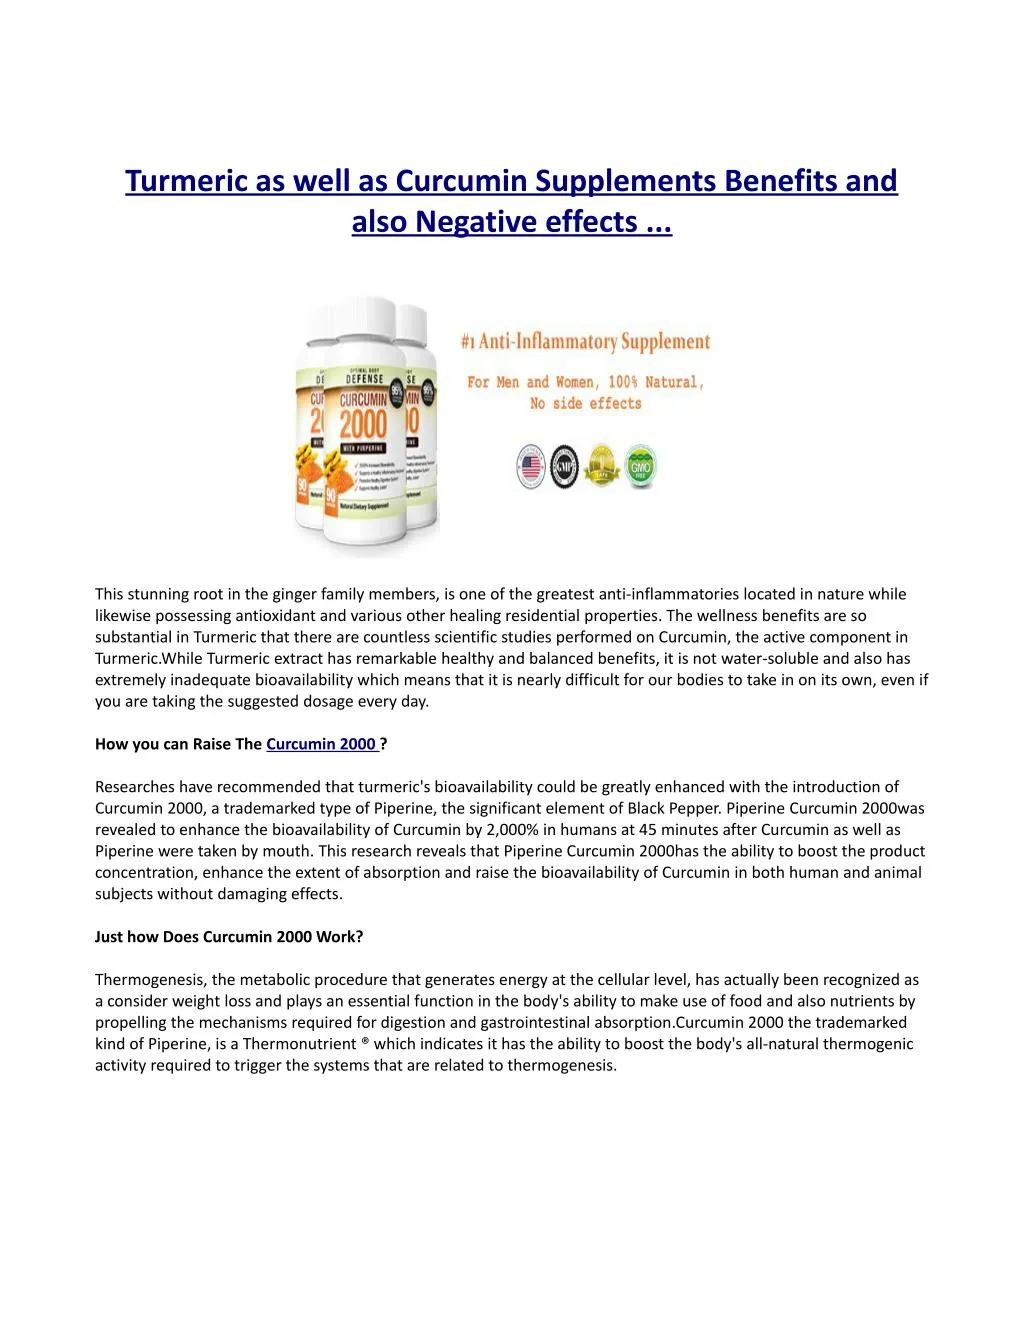 turmeric as well as curcumin supplements benefits